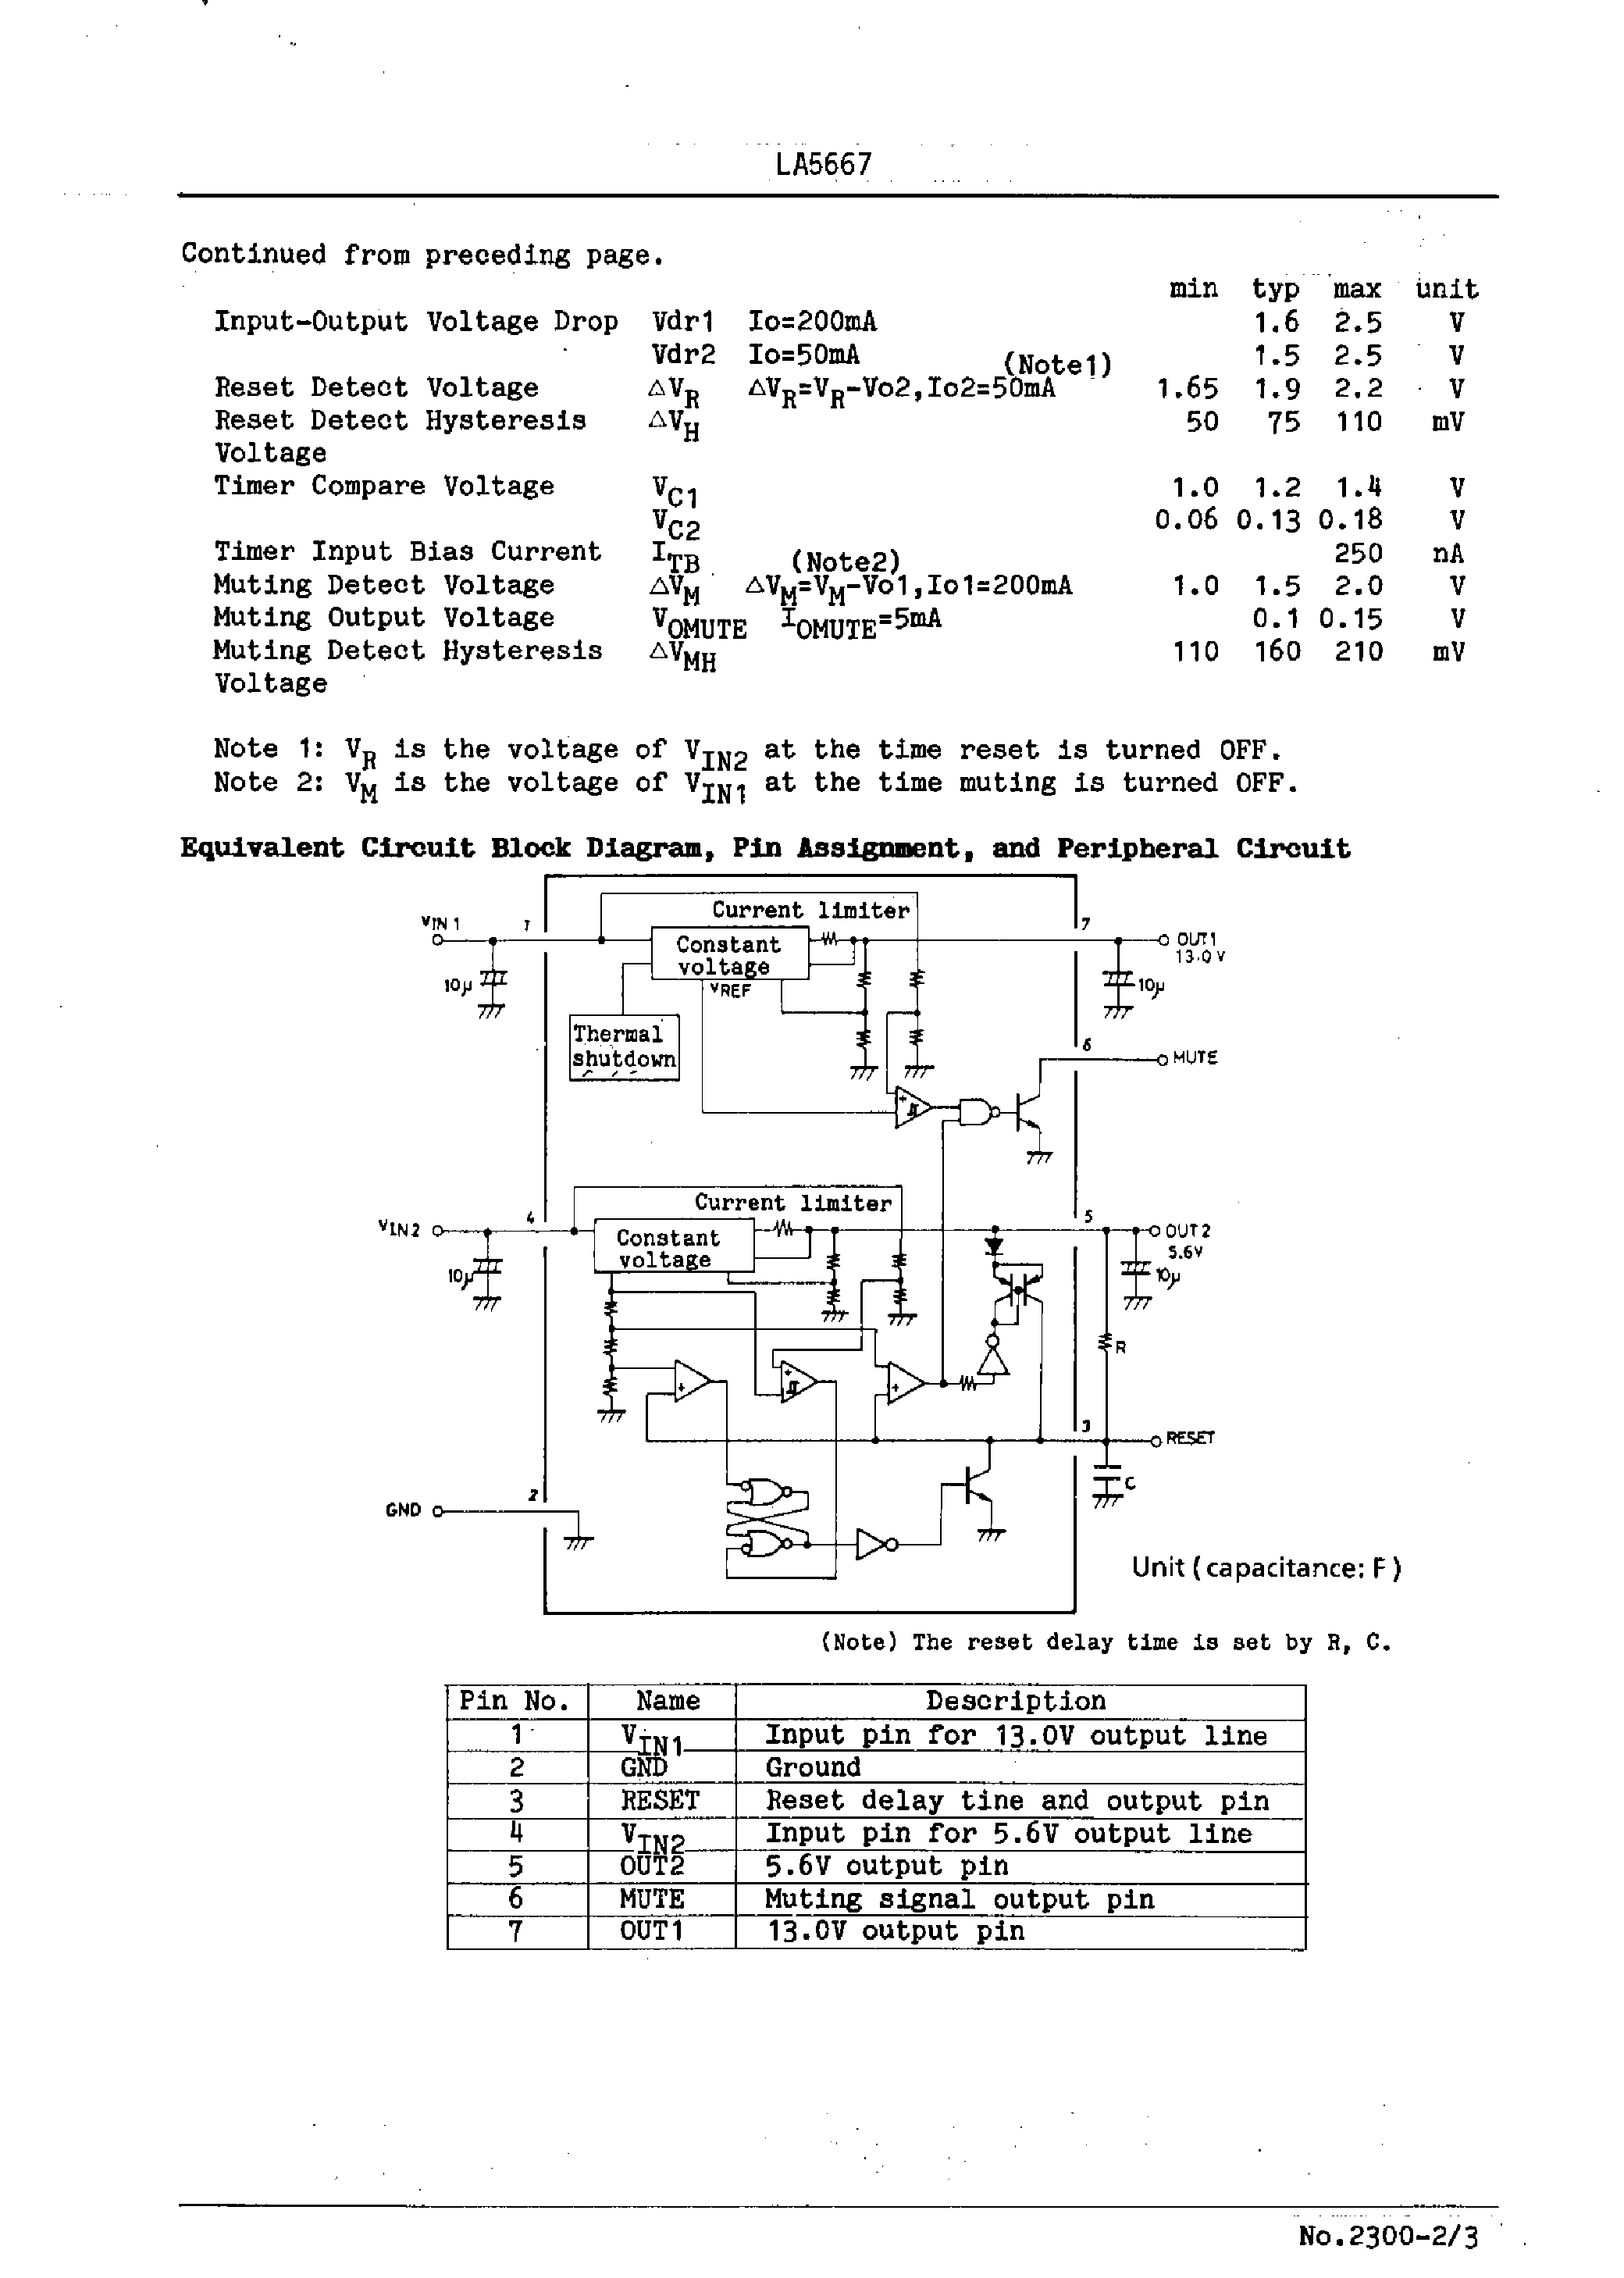 Datasheet LA5667 - Multifunction Multiple Voltage Regulator page 2